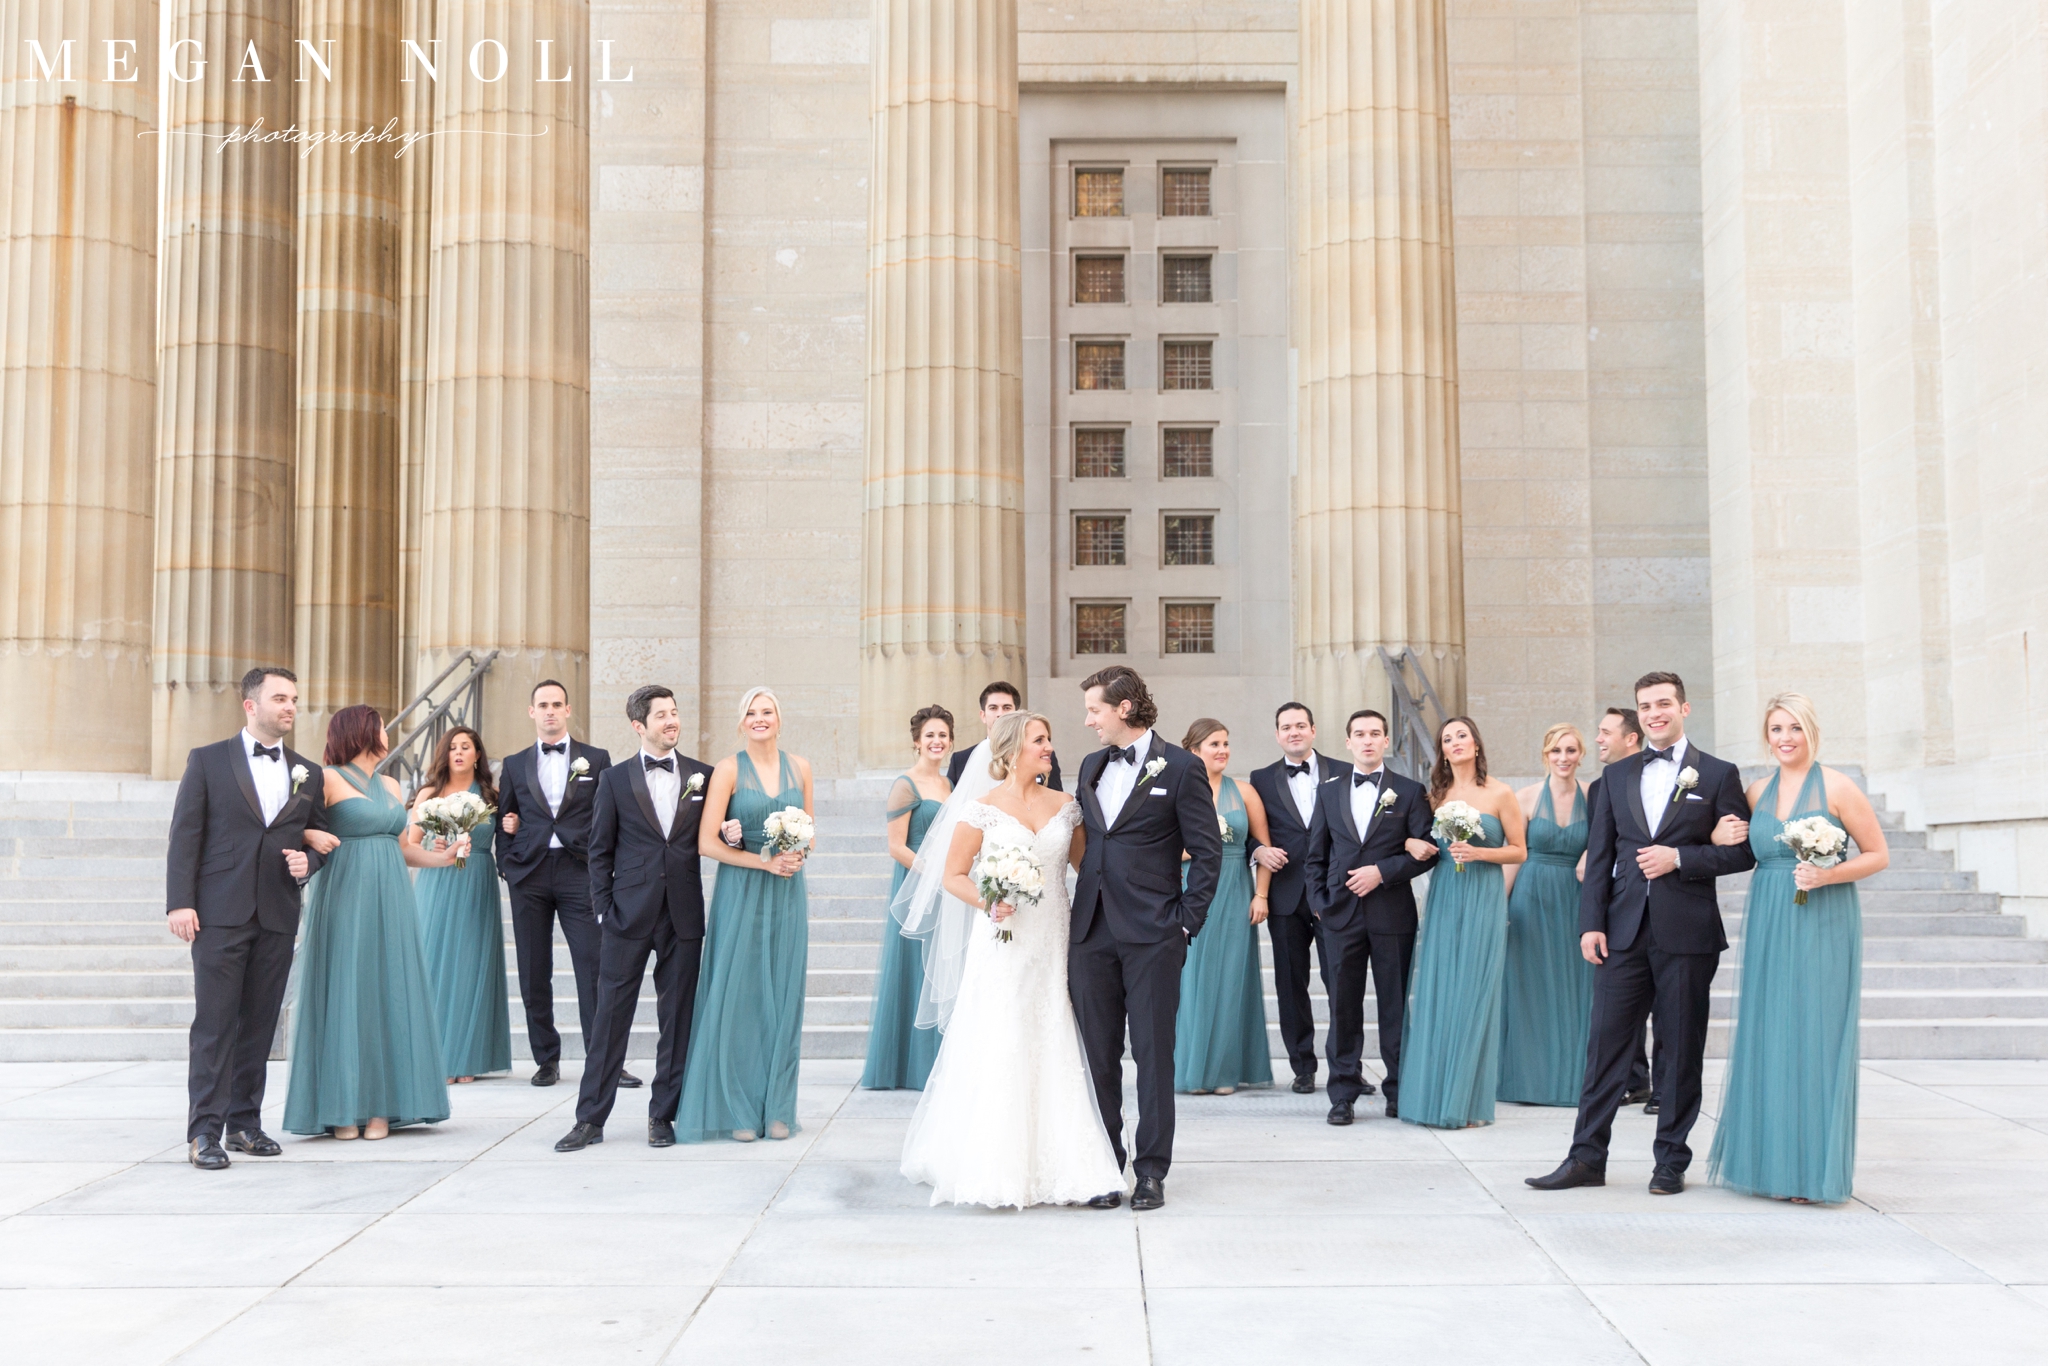 Wedding Photographers in Cincinnati, Bridal Party Pictures